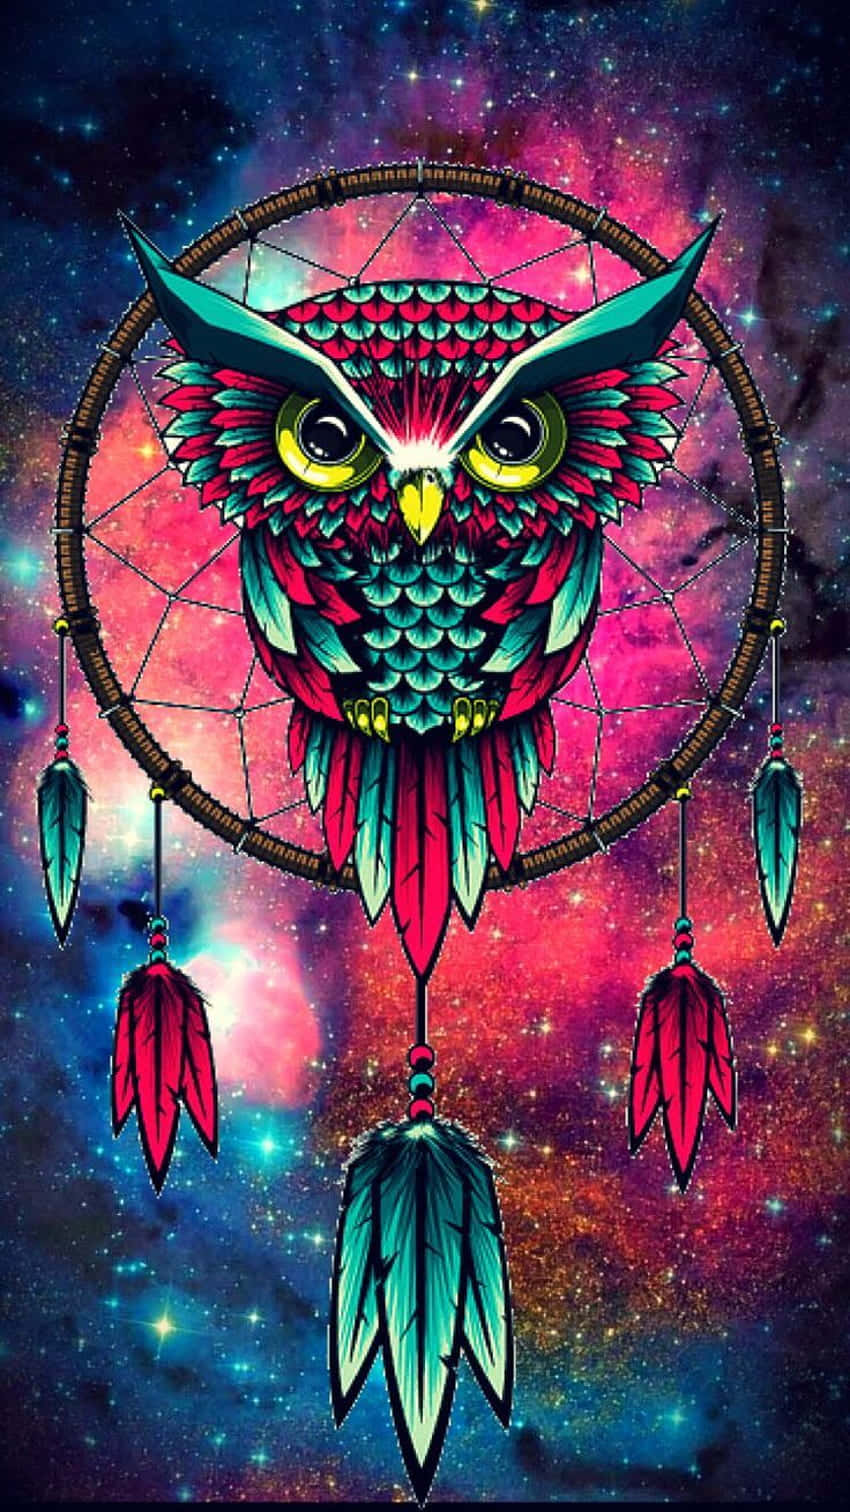 A Distinct Owl In A Dreamcatcher Wallpaper